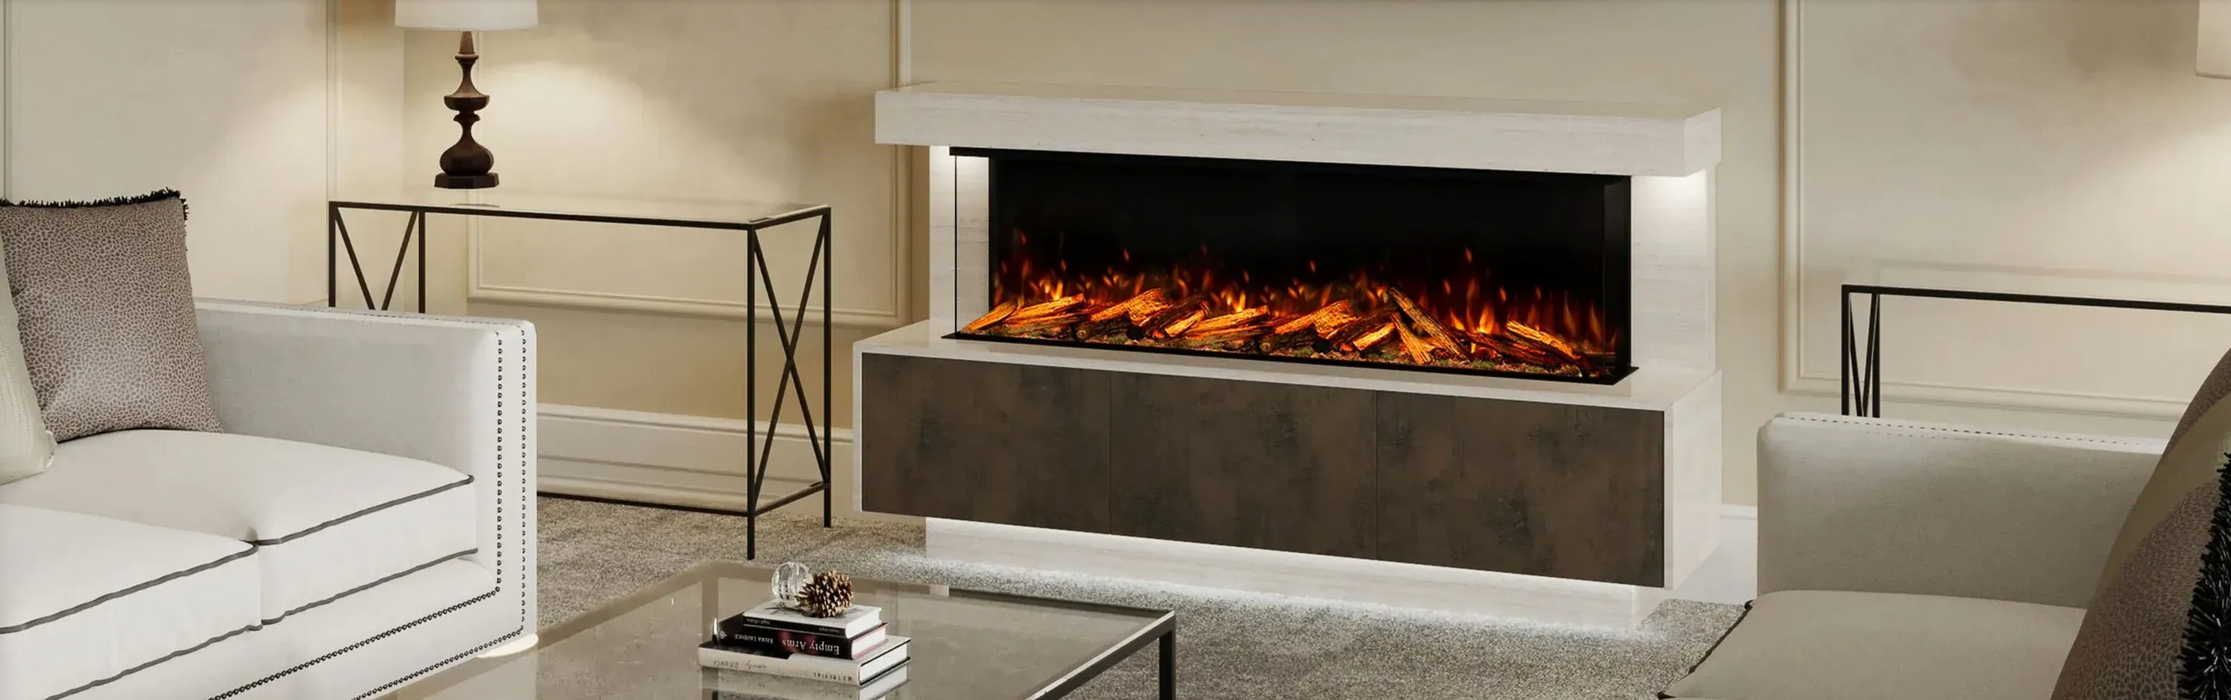 Bespoke Fireplaces Geneva 700 3DP Marble Suite